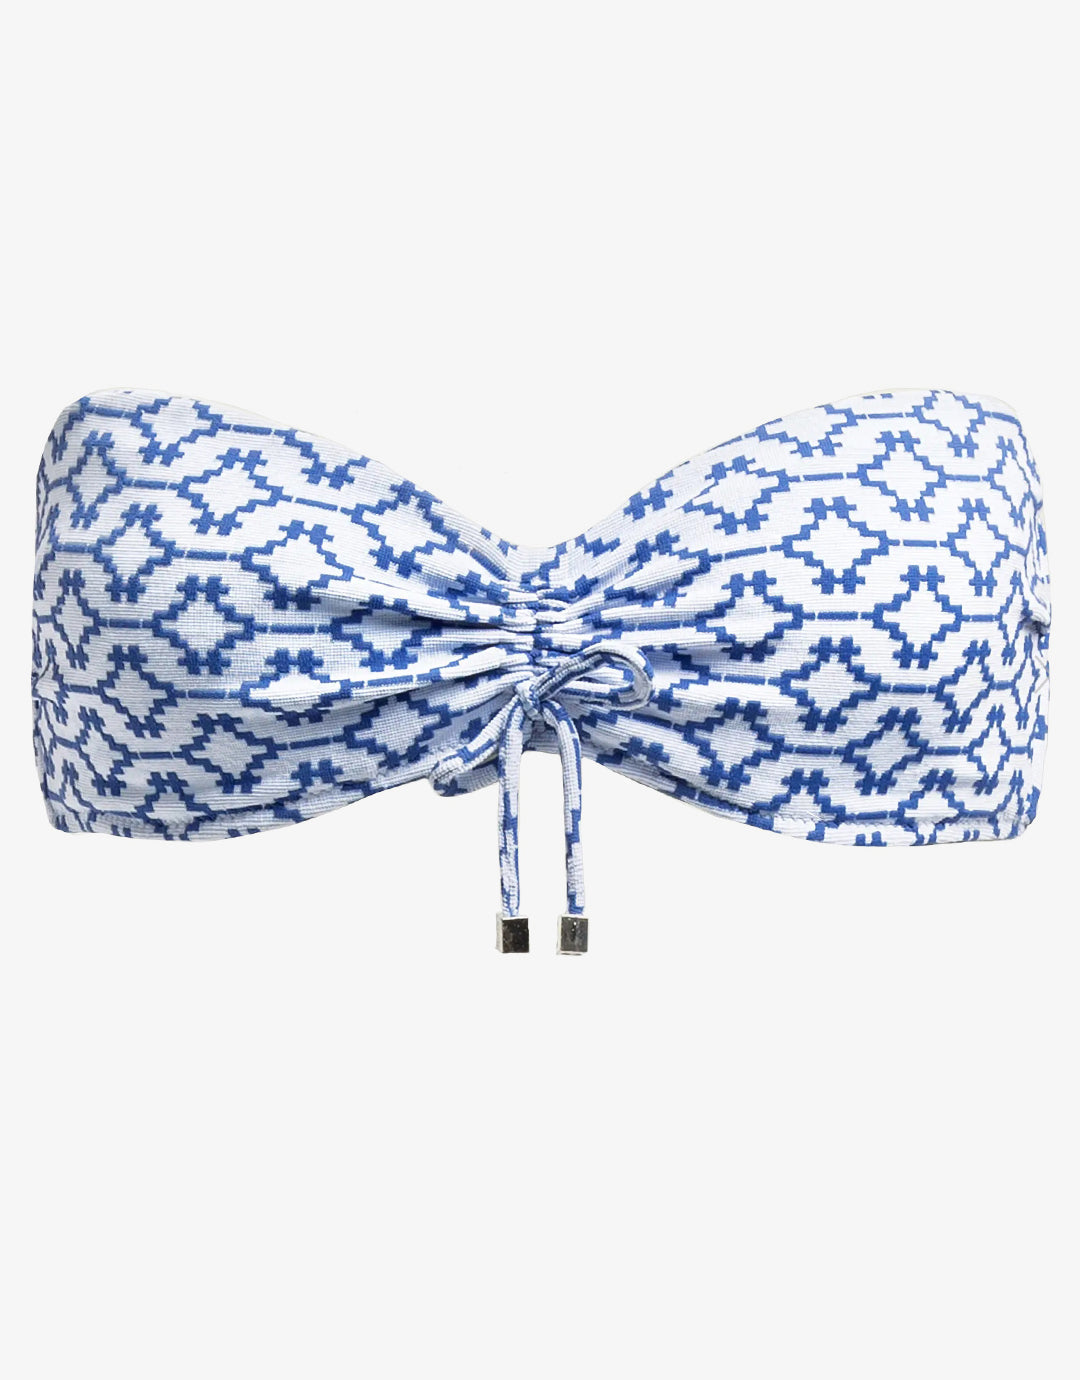 Mykonos Structured Bandeau Bikini Top - Blue and White - Simply Beach UK